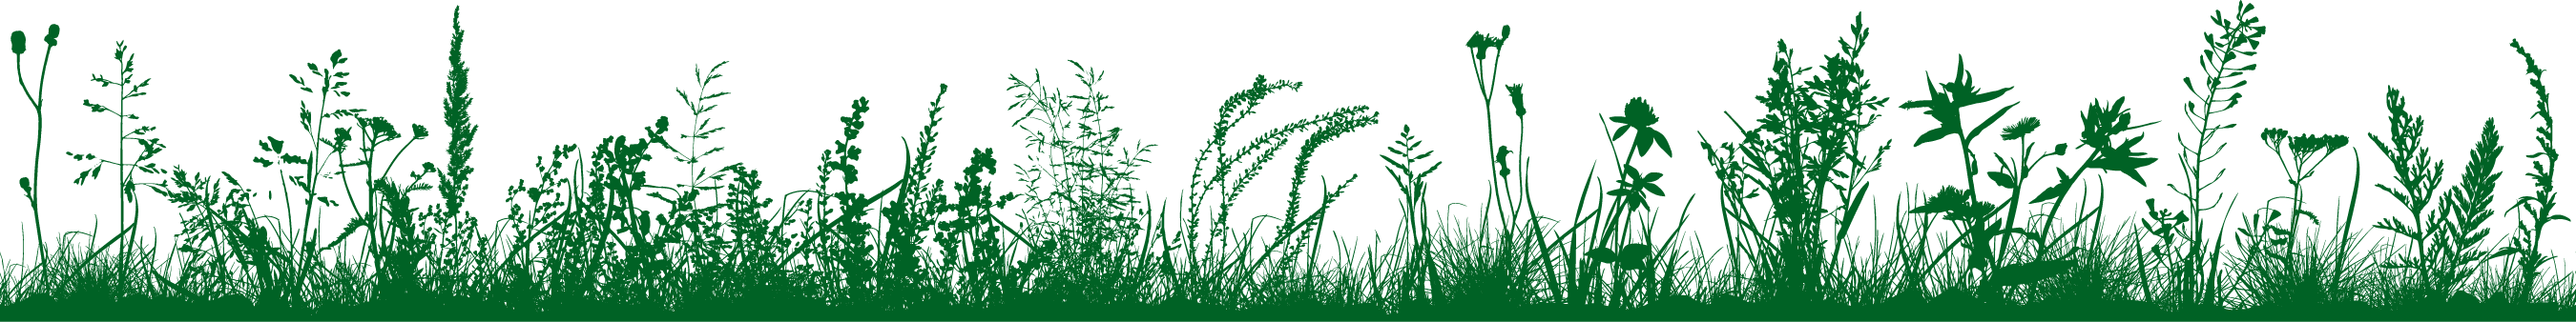 connemara meadow art 006225